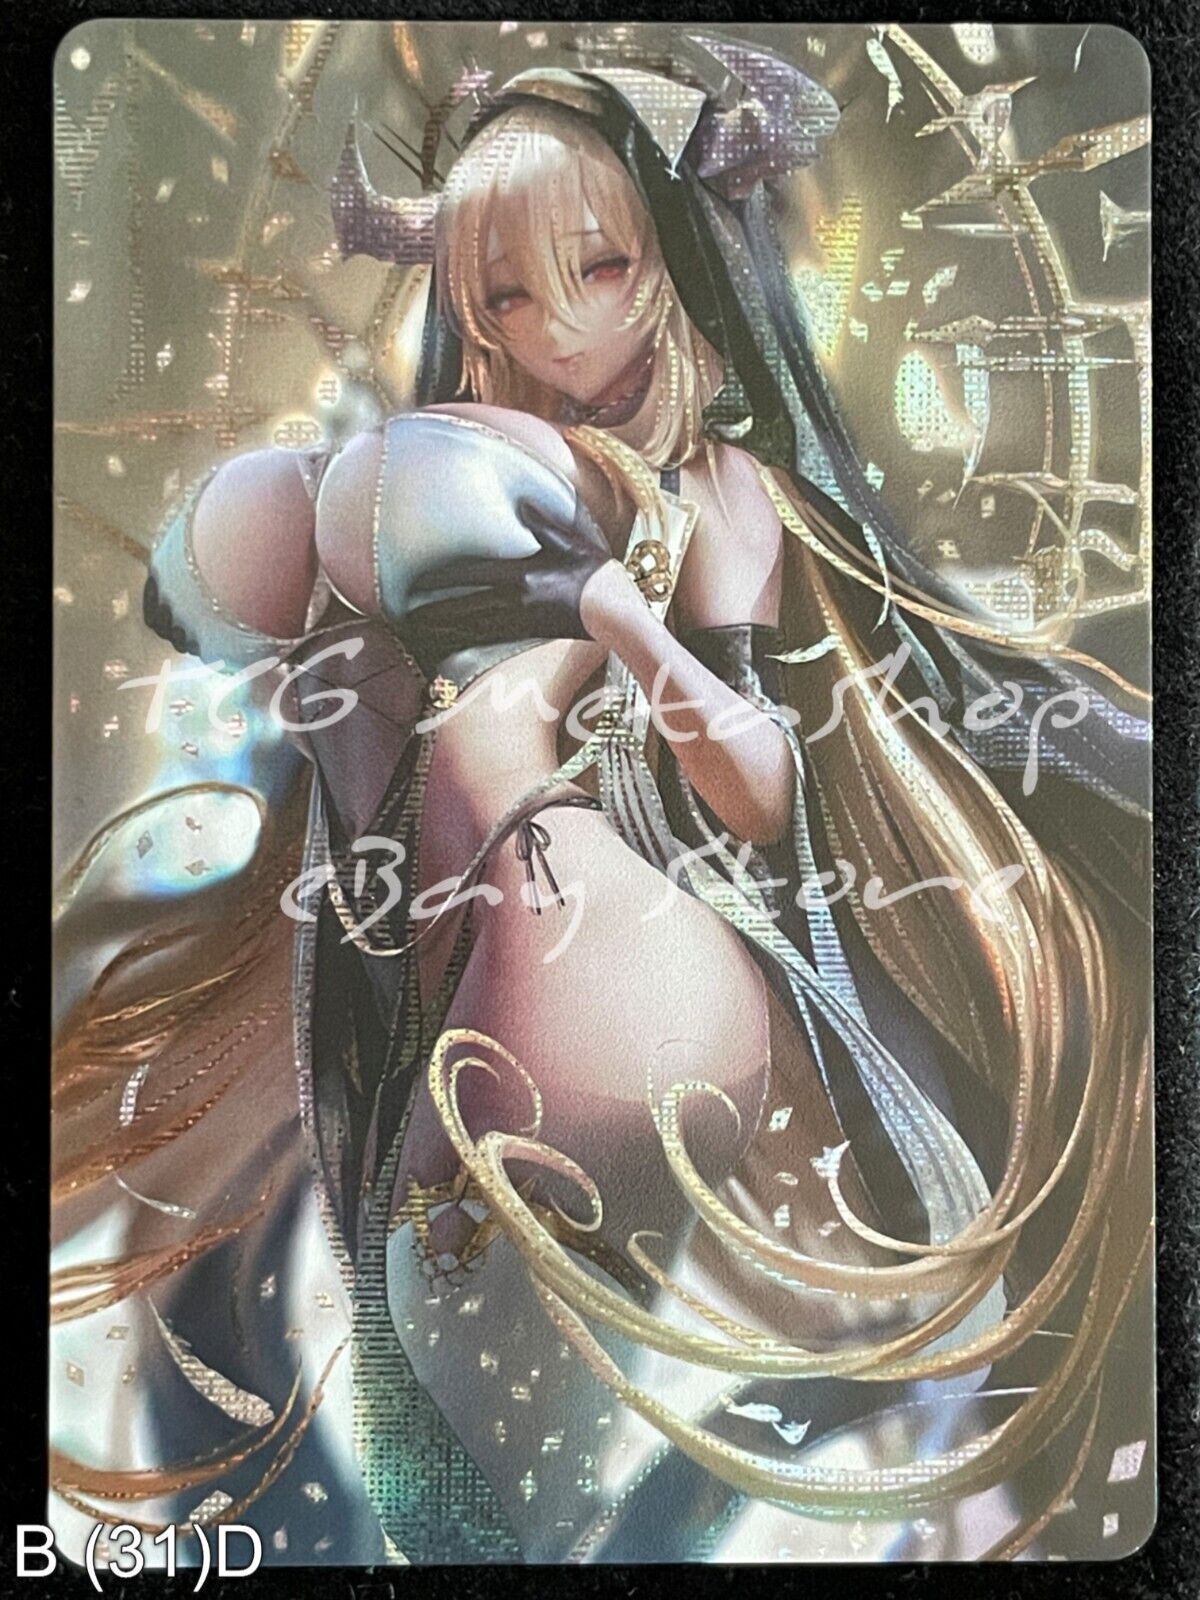 🔥 Implacable Azur Lane Goddess Story Anime Waifu Card ACG B 31 🔥